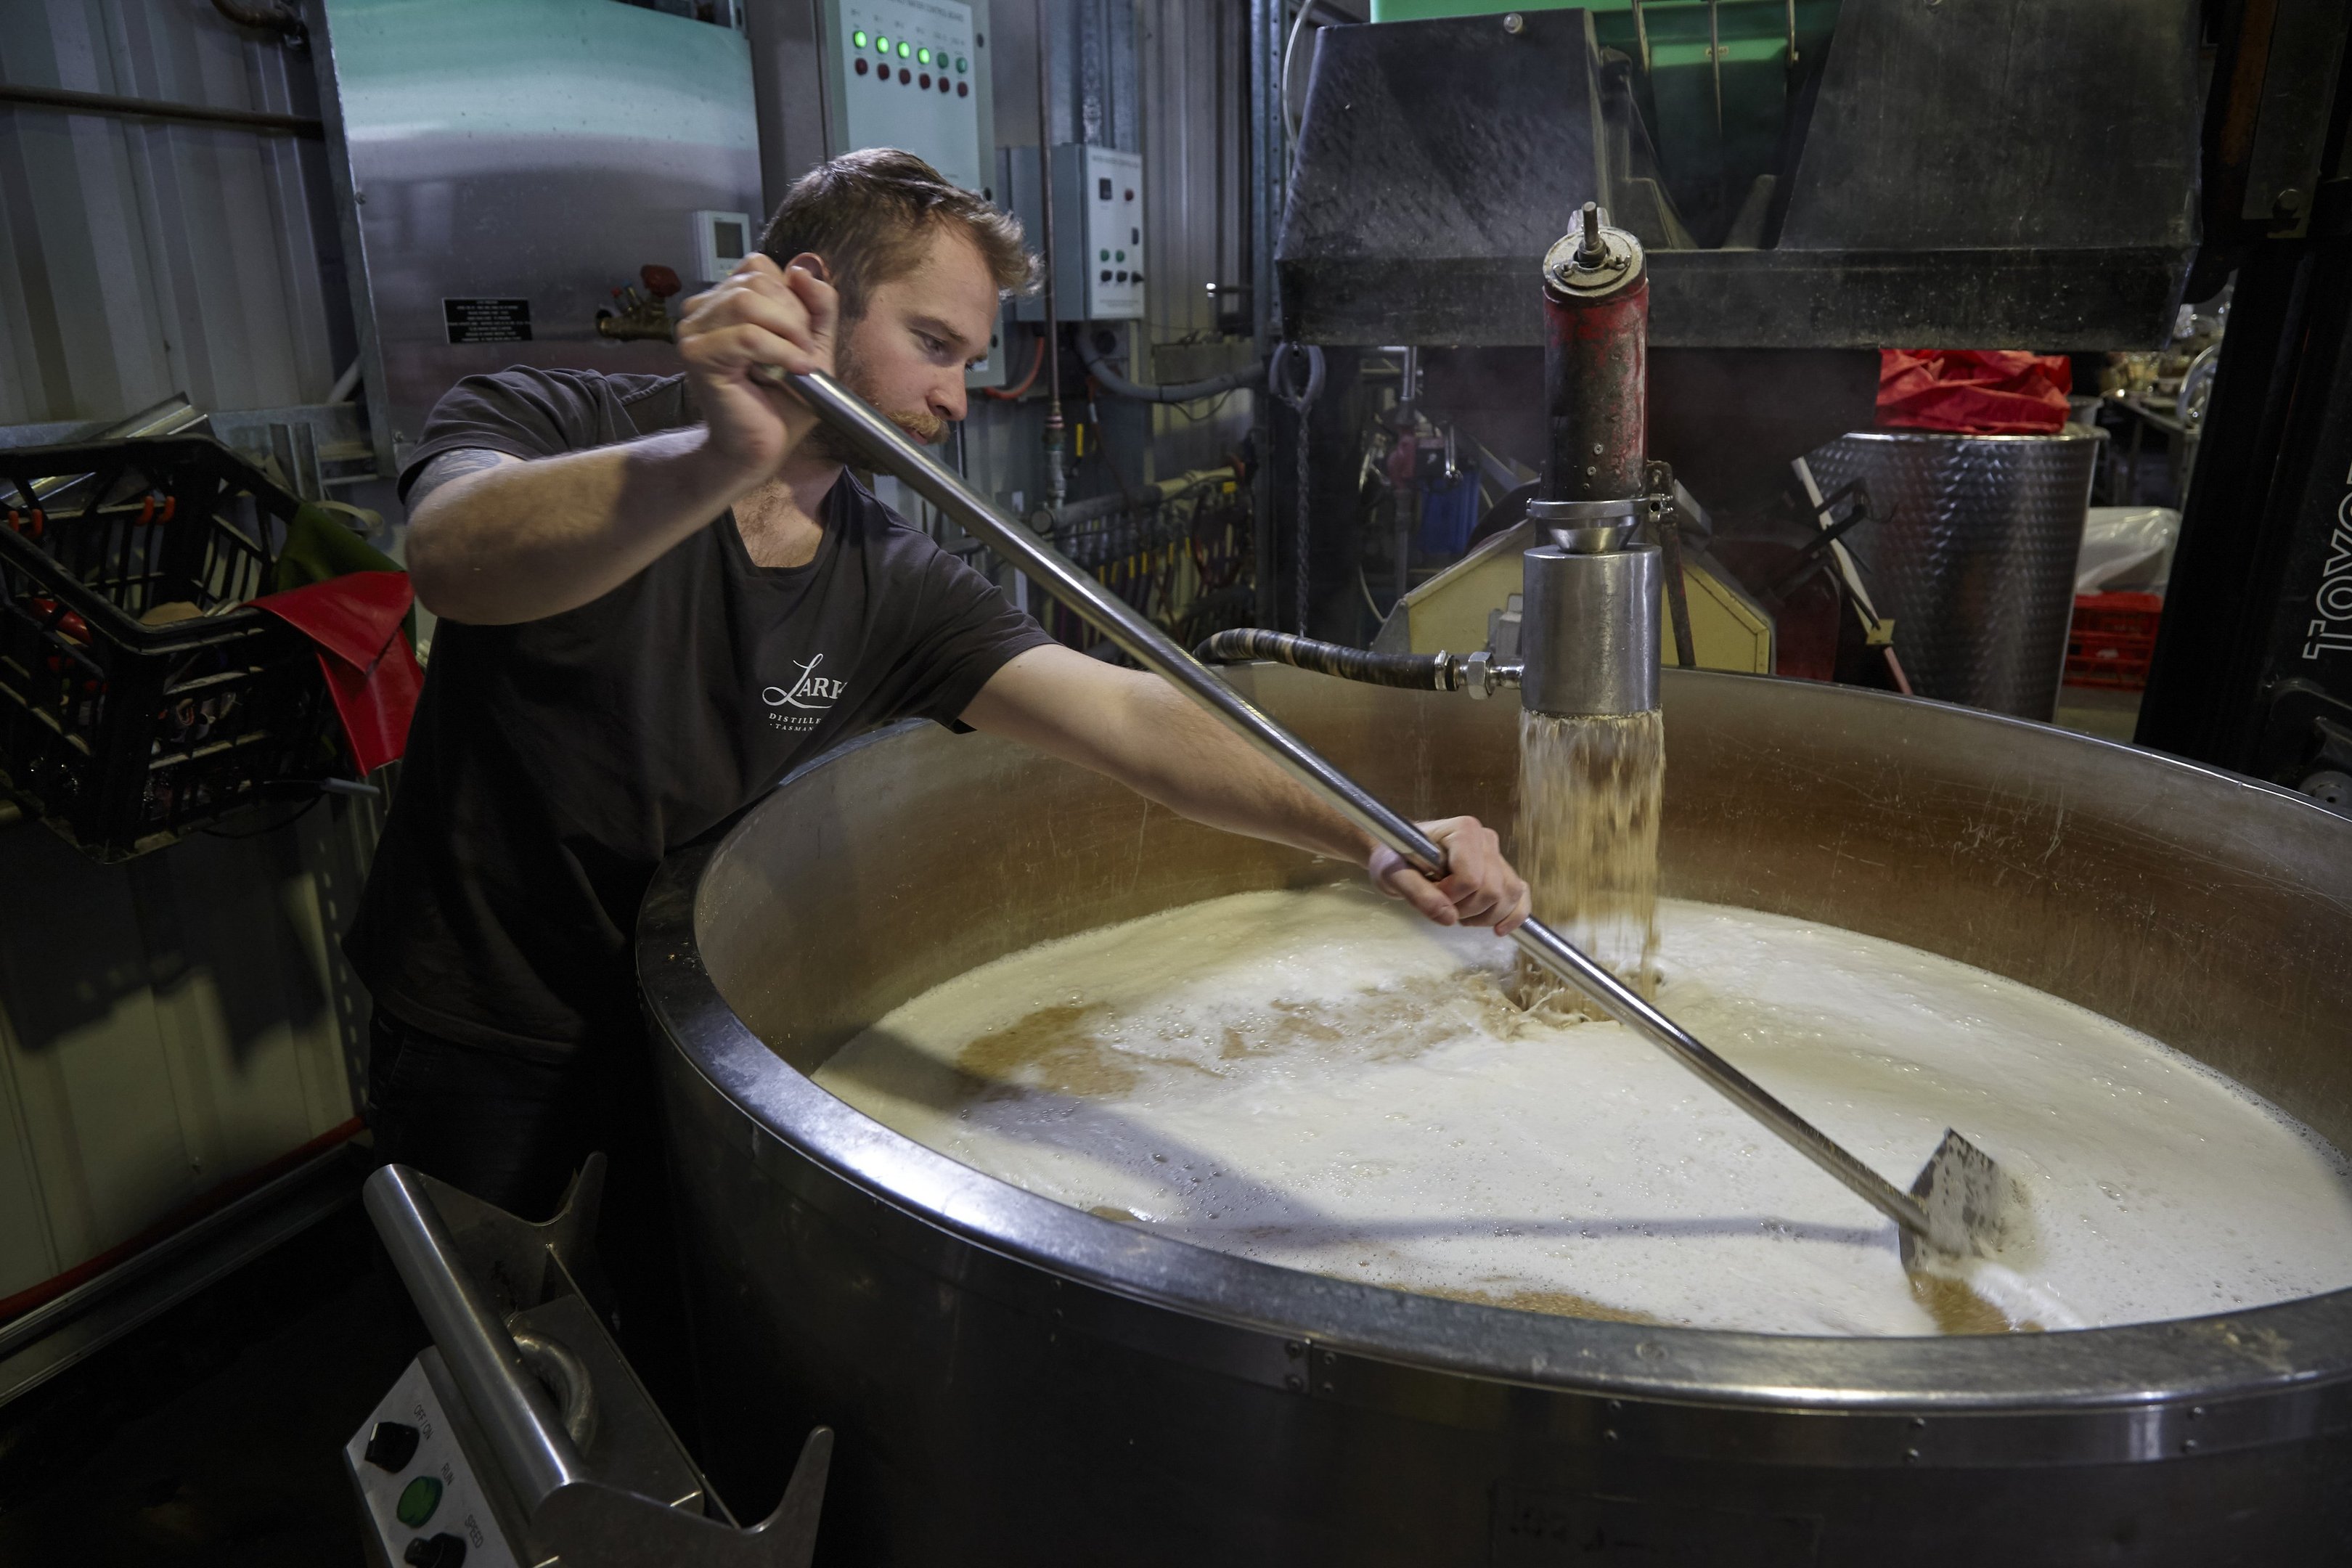  Lark Distillery, na Tasmânia, Austrália: produção de single malt local